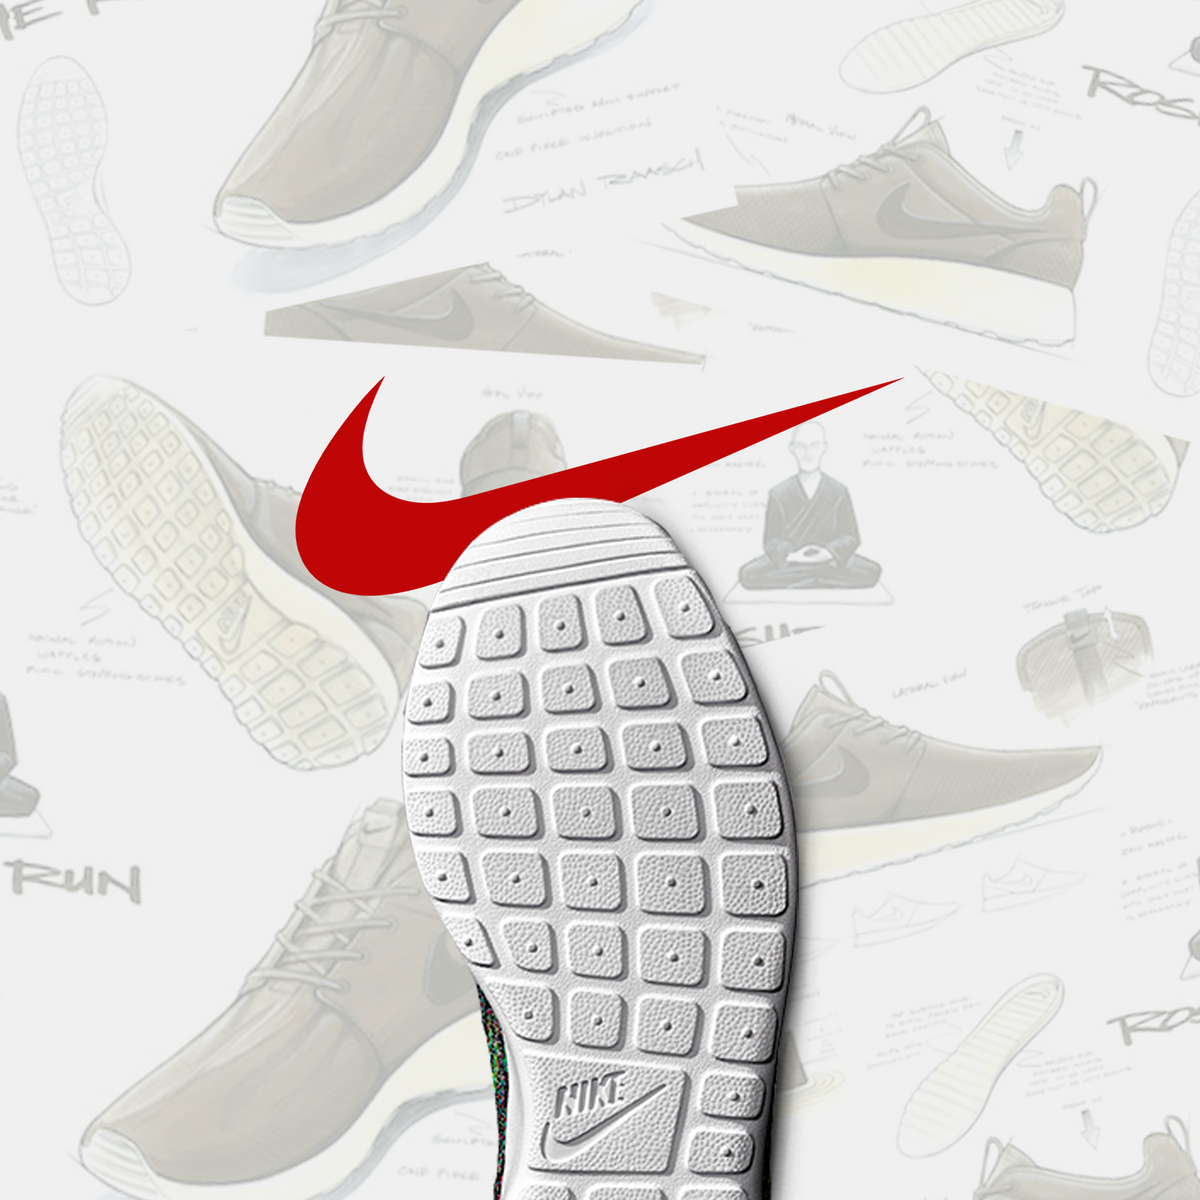 What Happened To The Nike Roshe Run?